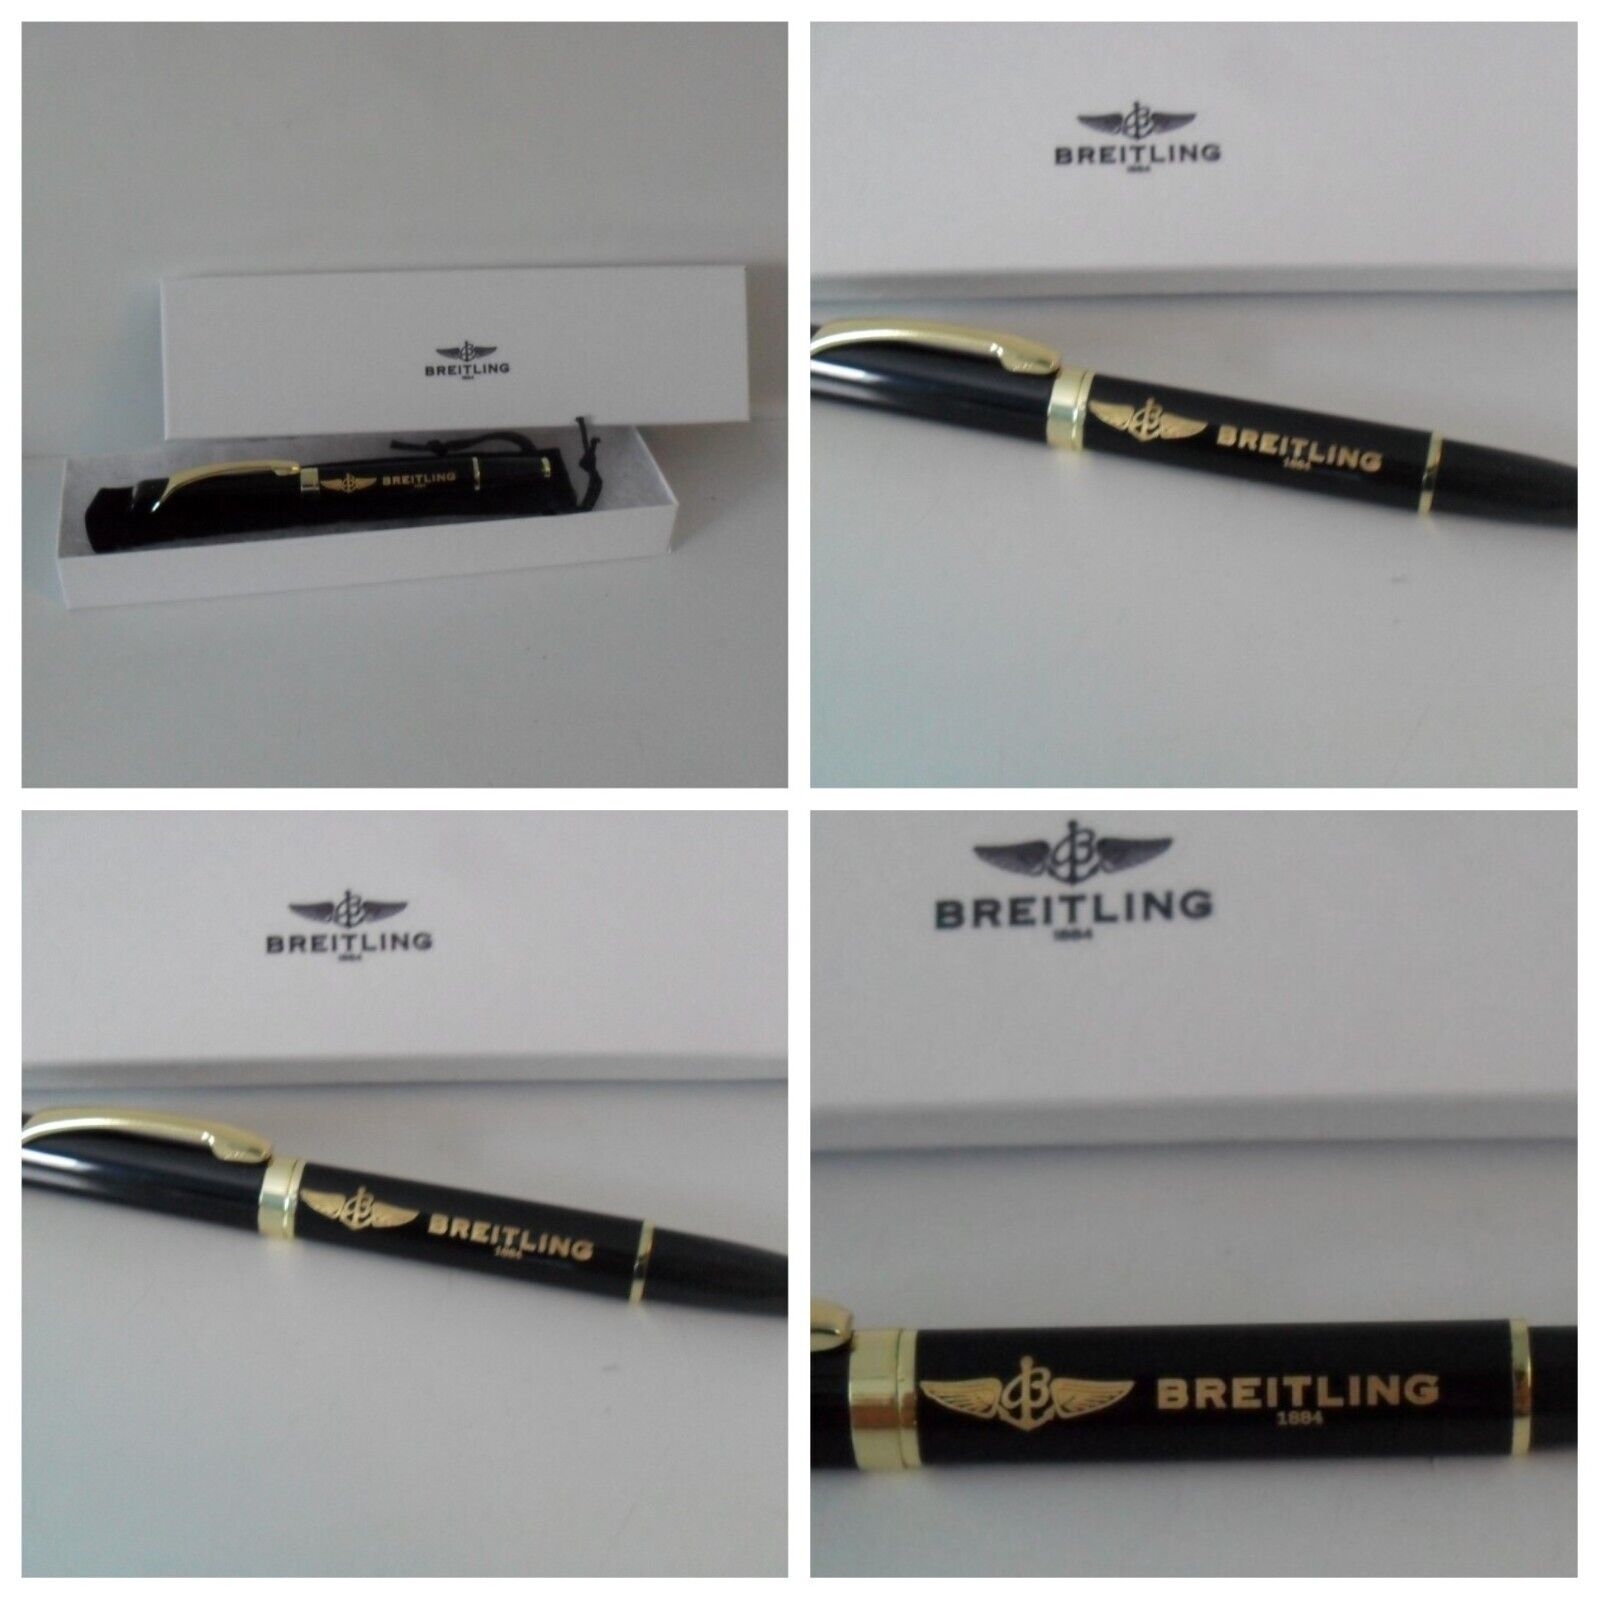 BREITLING Pen Nice Luxury Promo Pen Includes Felt Pen Tote & Gift Box BRAND NEW